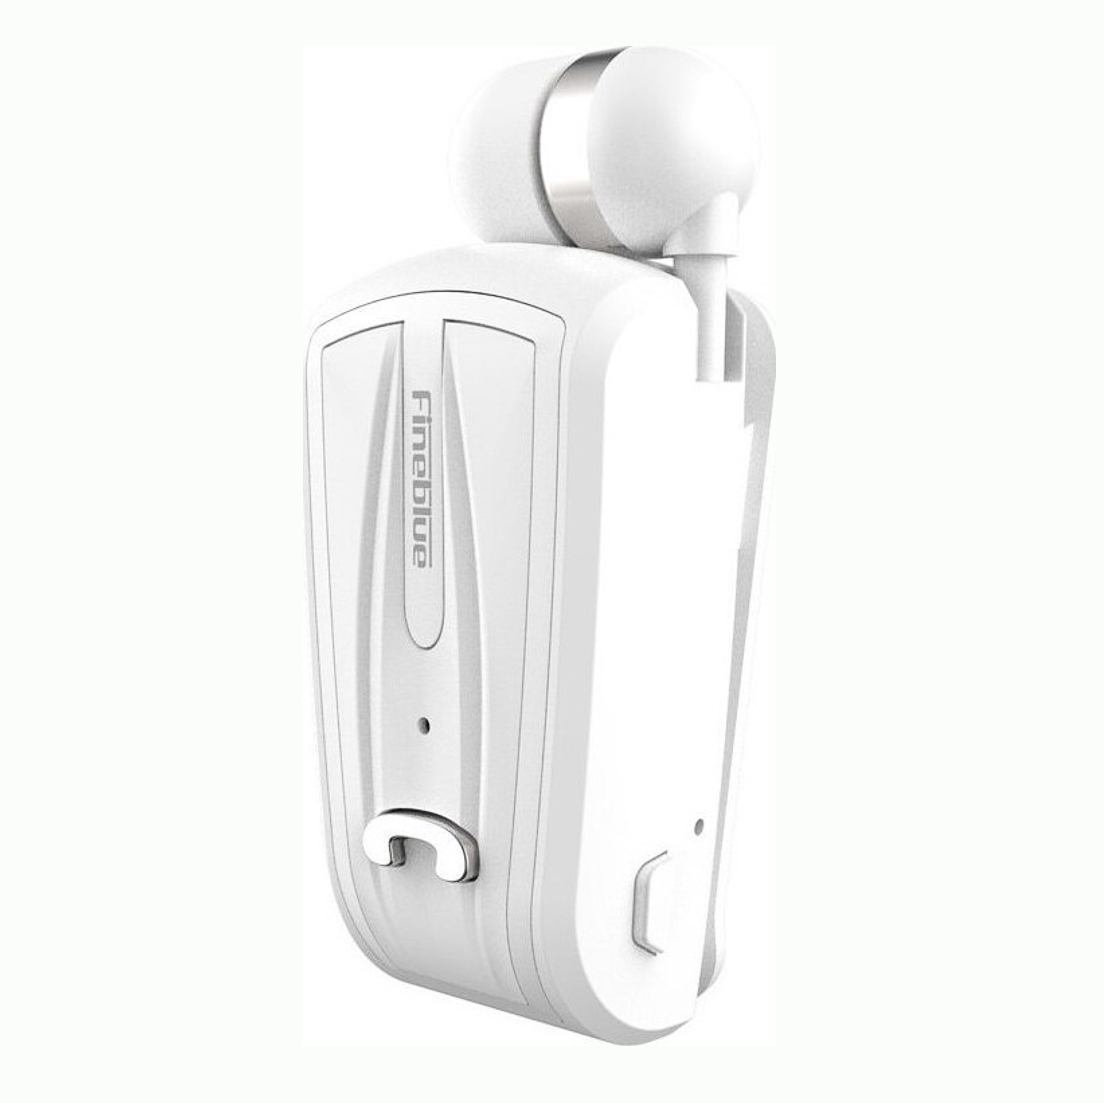 bluetooth headset fineblue f-v6 mini wireless σε λευκό χρώμα